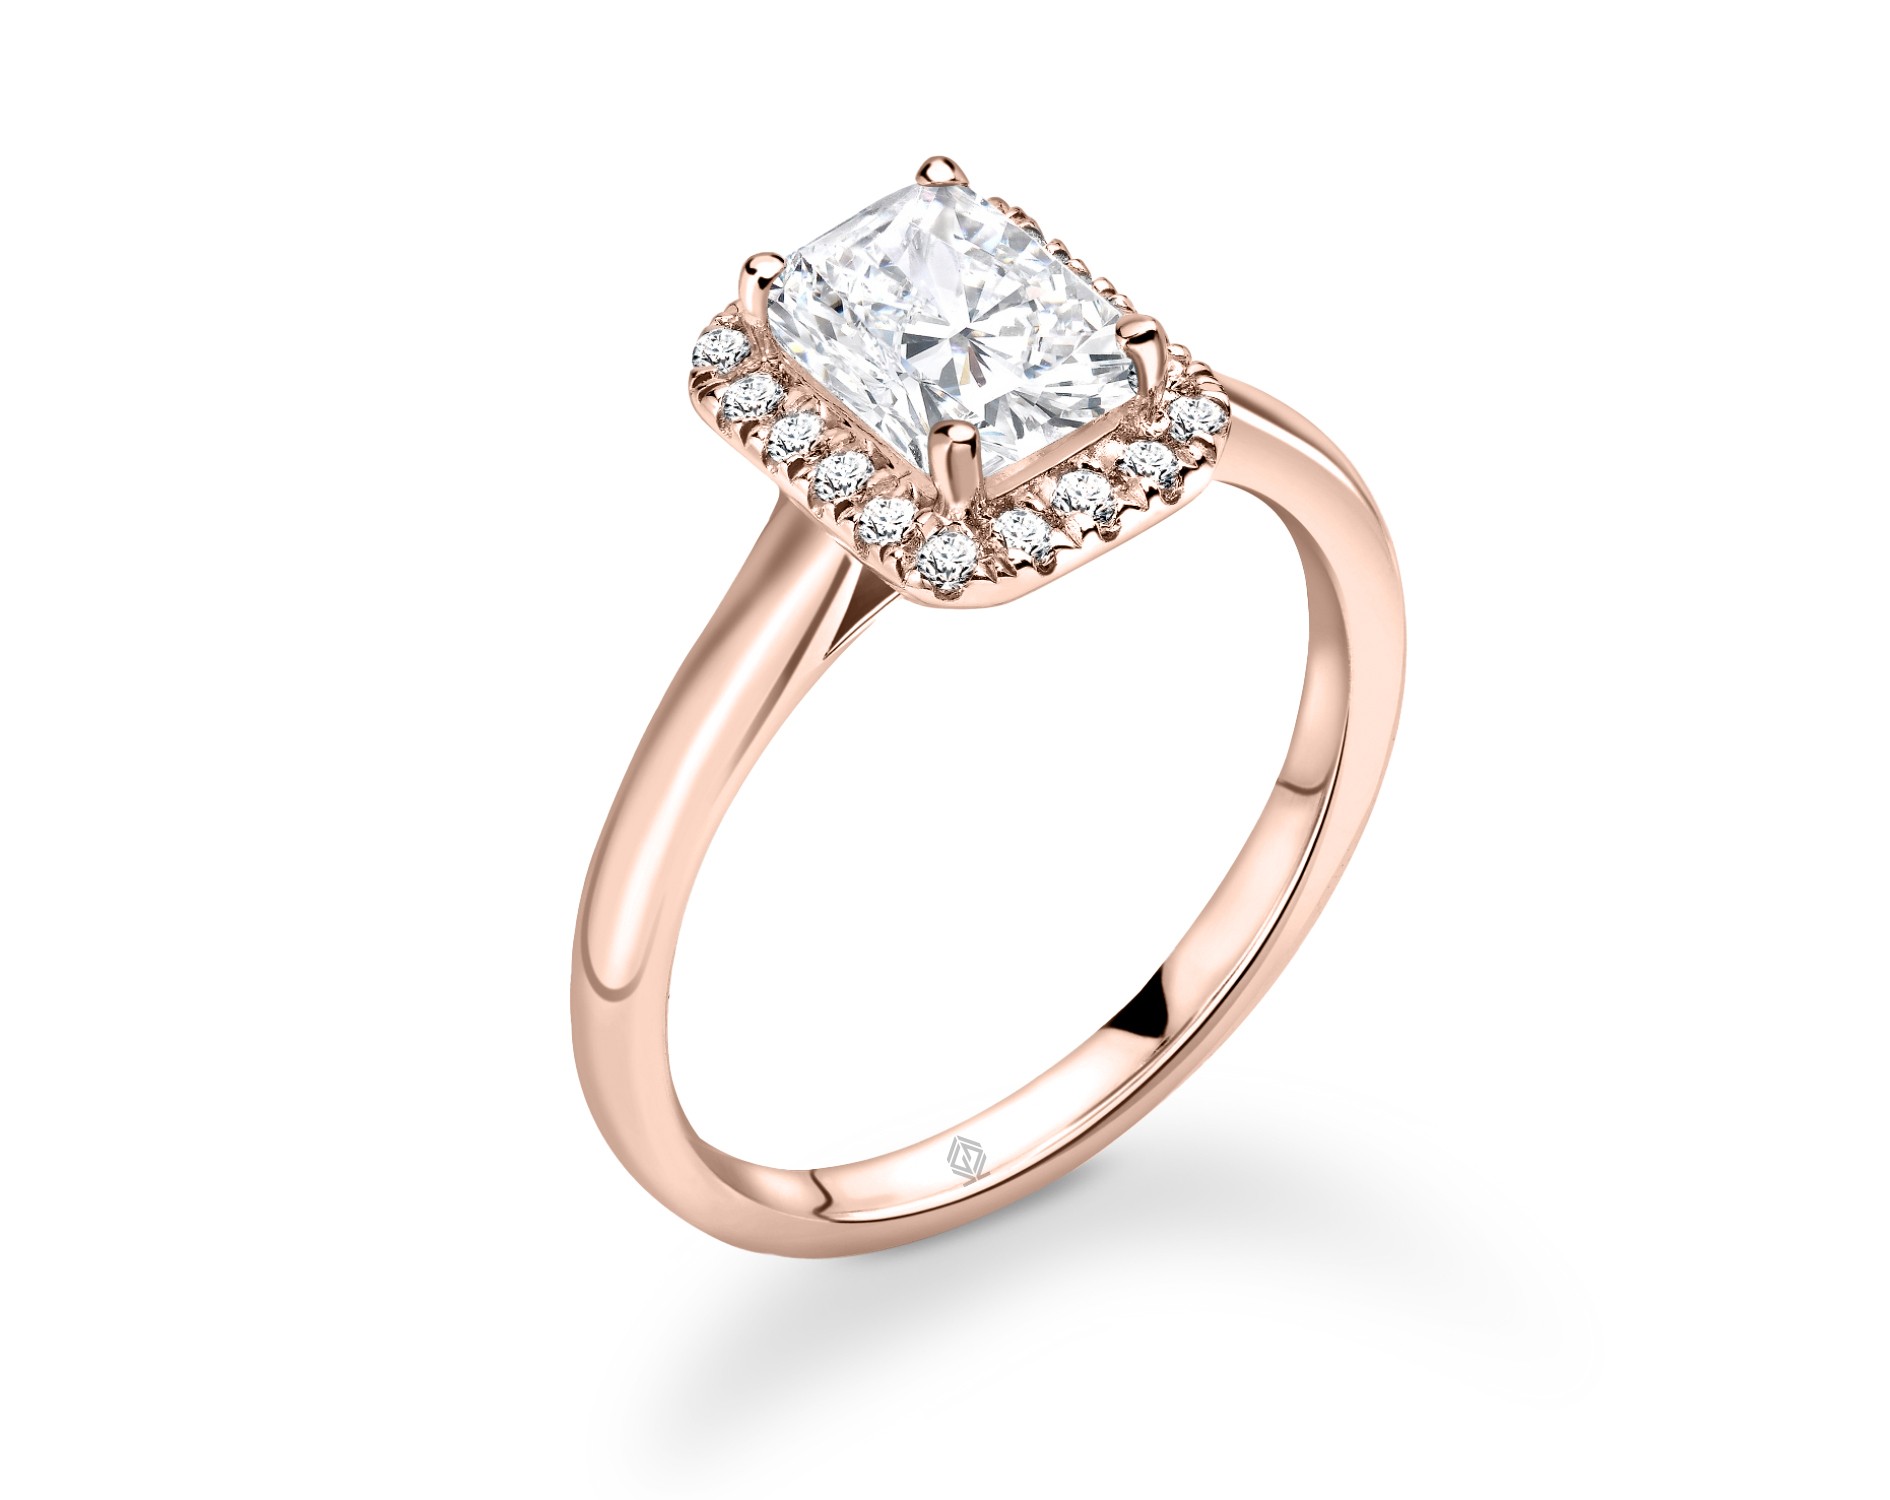 18K ROSE GOLD HALO SET EMERALD CUT DIAMOND ENGAGEMENT RING